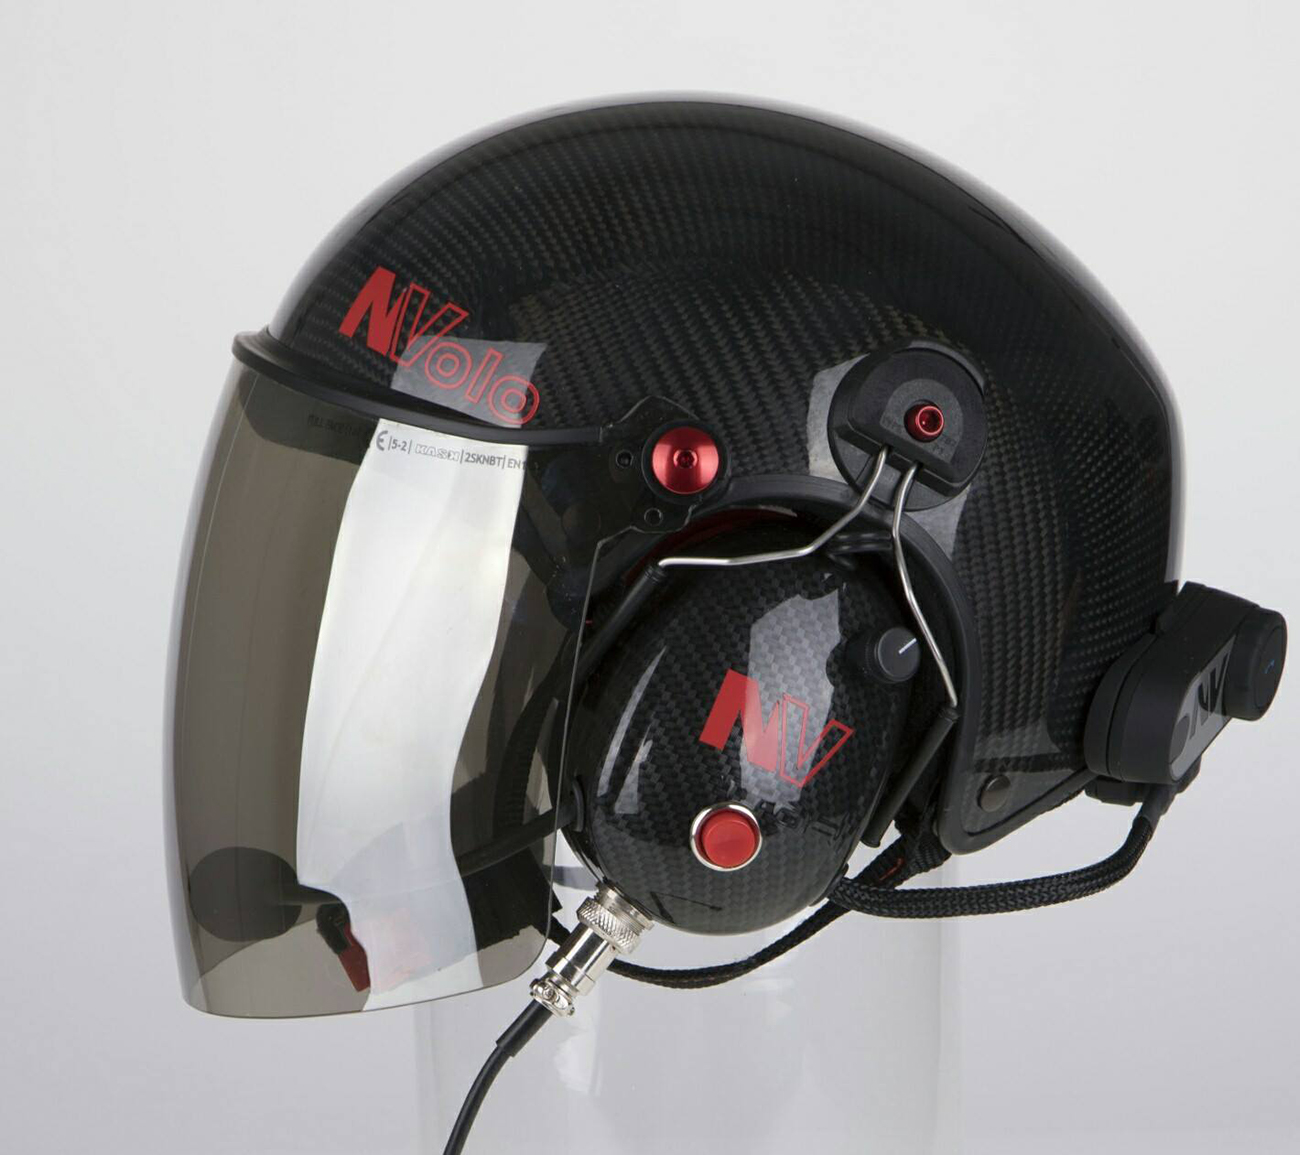 Helmet for Paramotor Pilots 